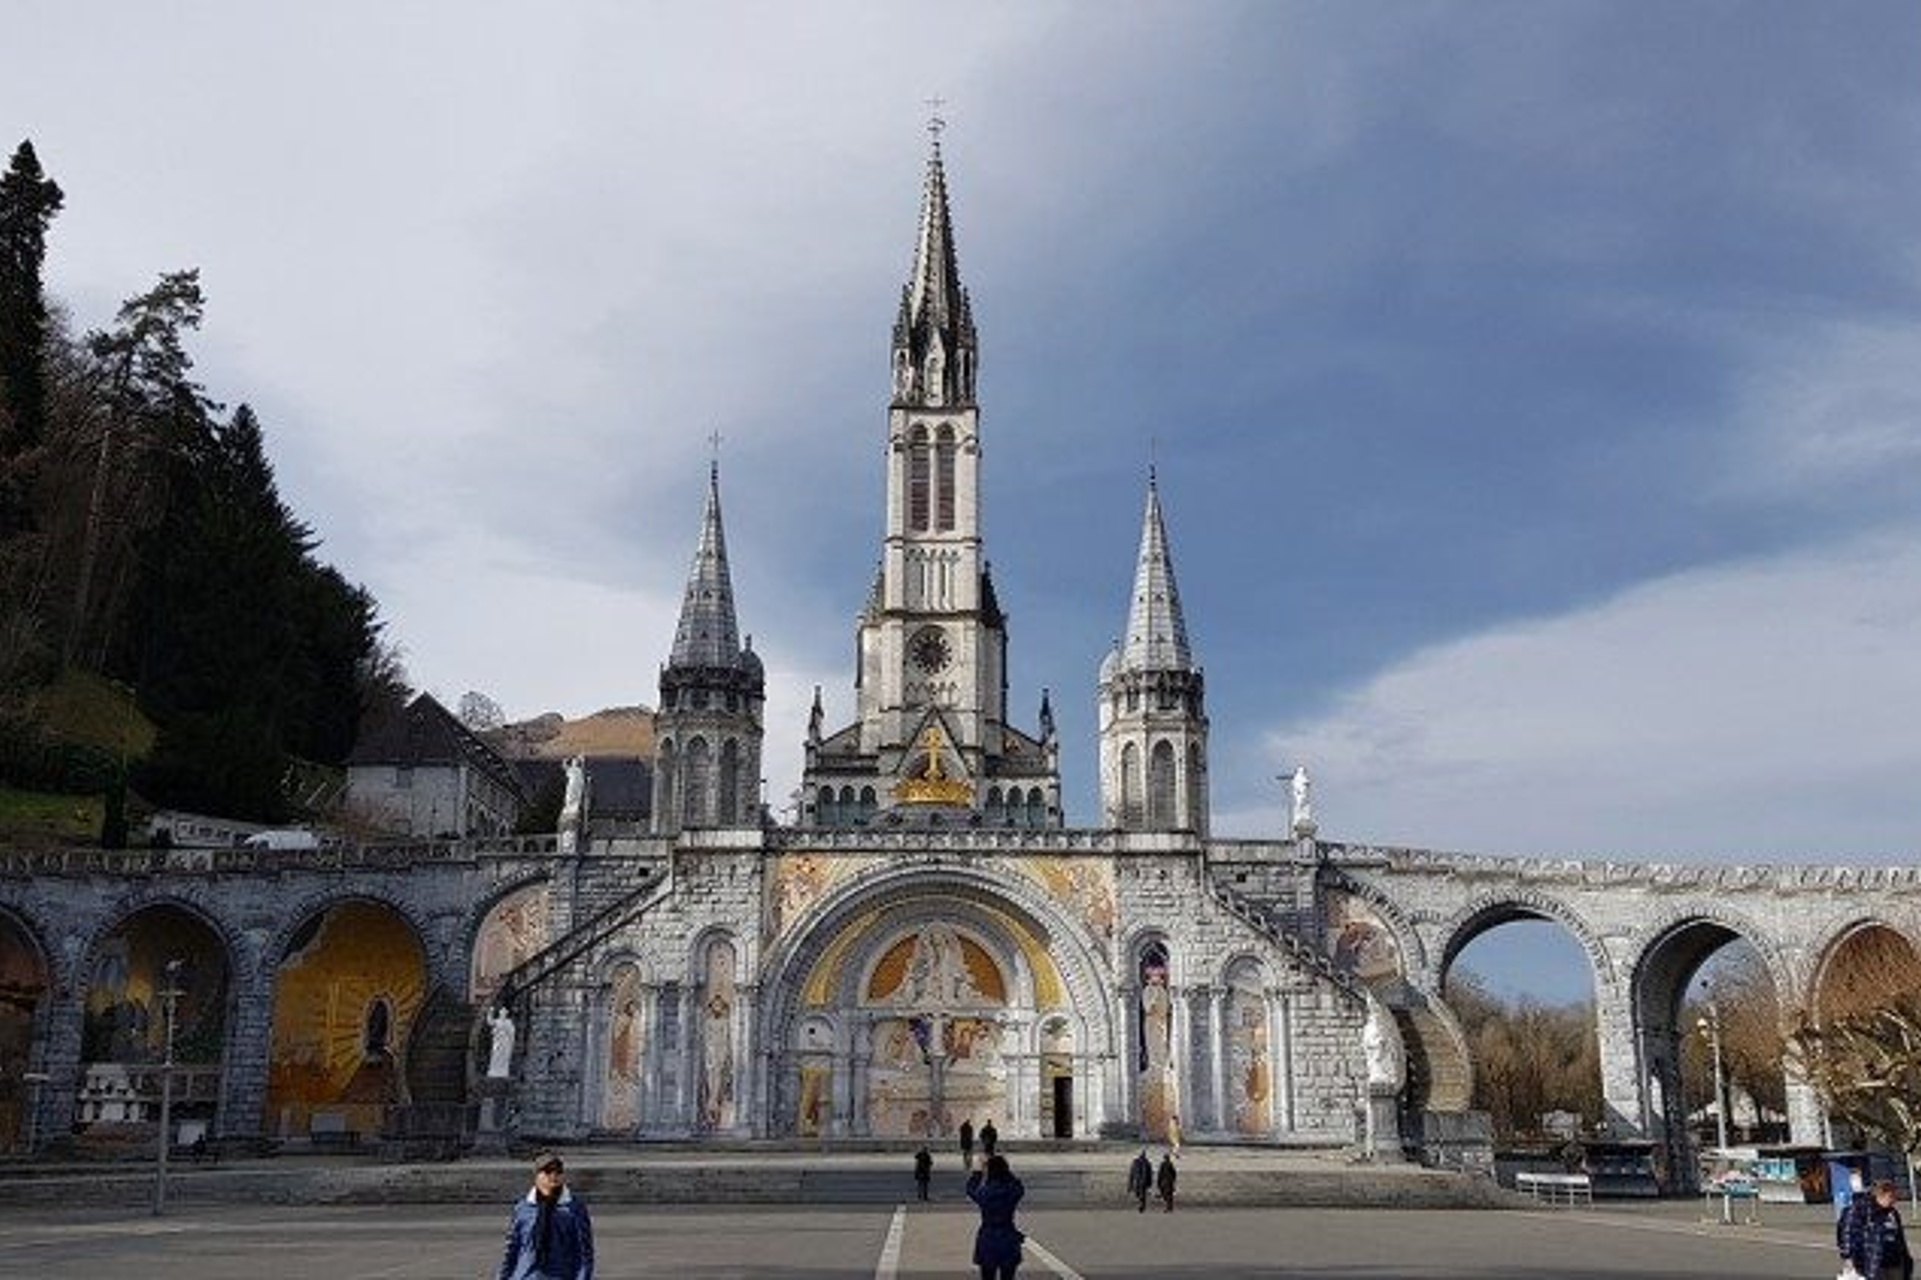 Lourdes to host first online world pilgrimage - Limerick Diocese